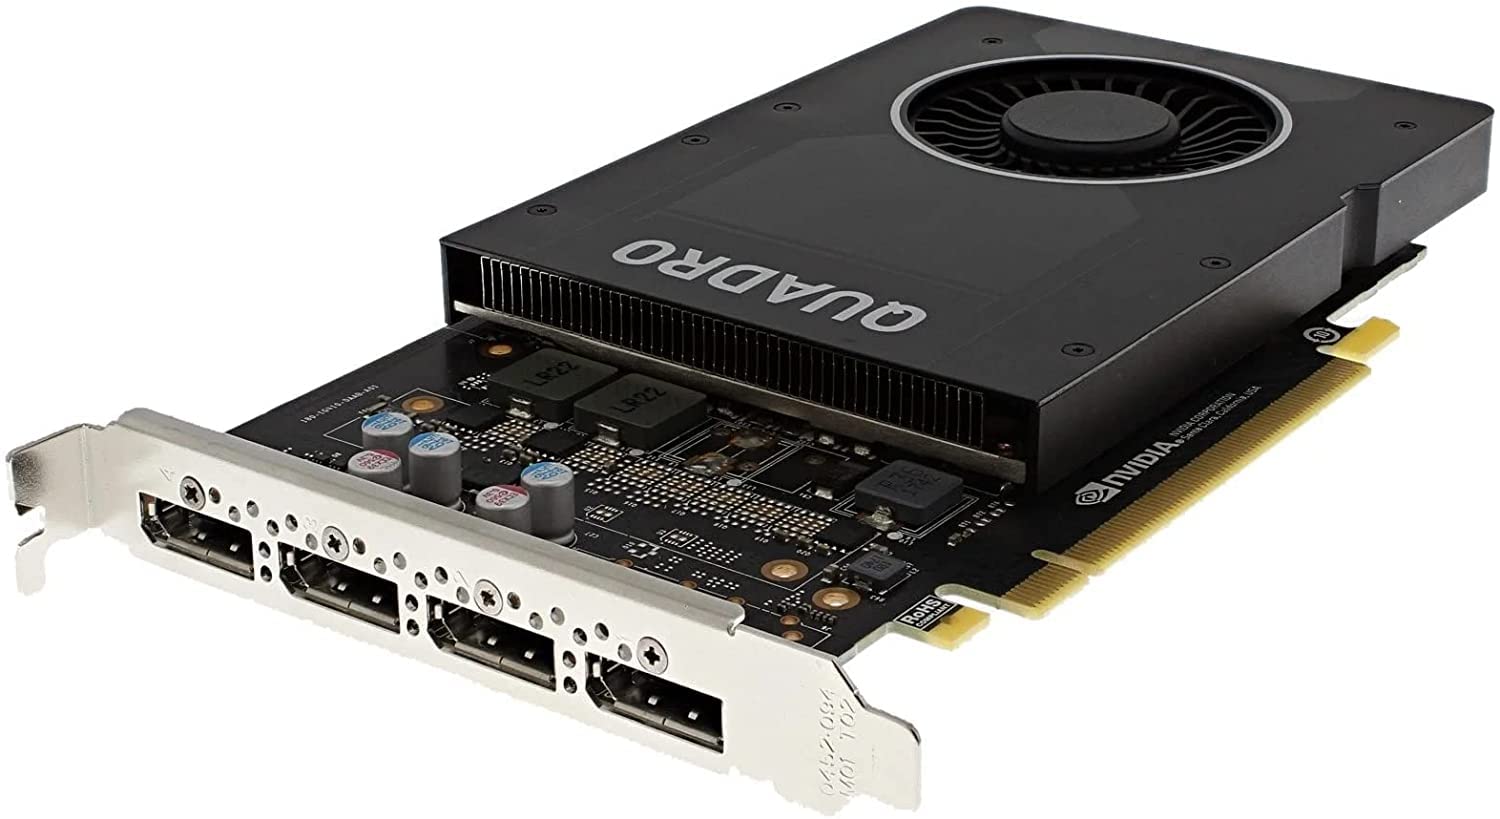 Lenovo Nvidia Quadro P2000 5GB GDDR5 Single-Slot Graphics Card - 1024 CUDA Cores, 3.0 TFLOPS, 160bit, 140GB/s, 4 x DisplayPort 1.4, 75W Power Consumption, PCI Express 3.0 x16 - DC1P4 (Renewed)